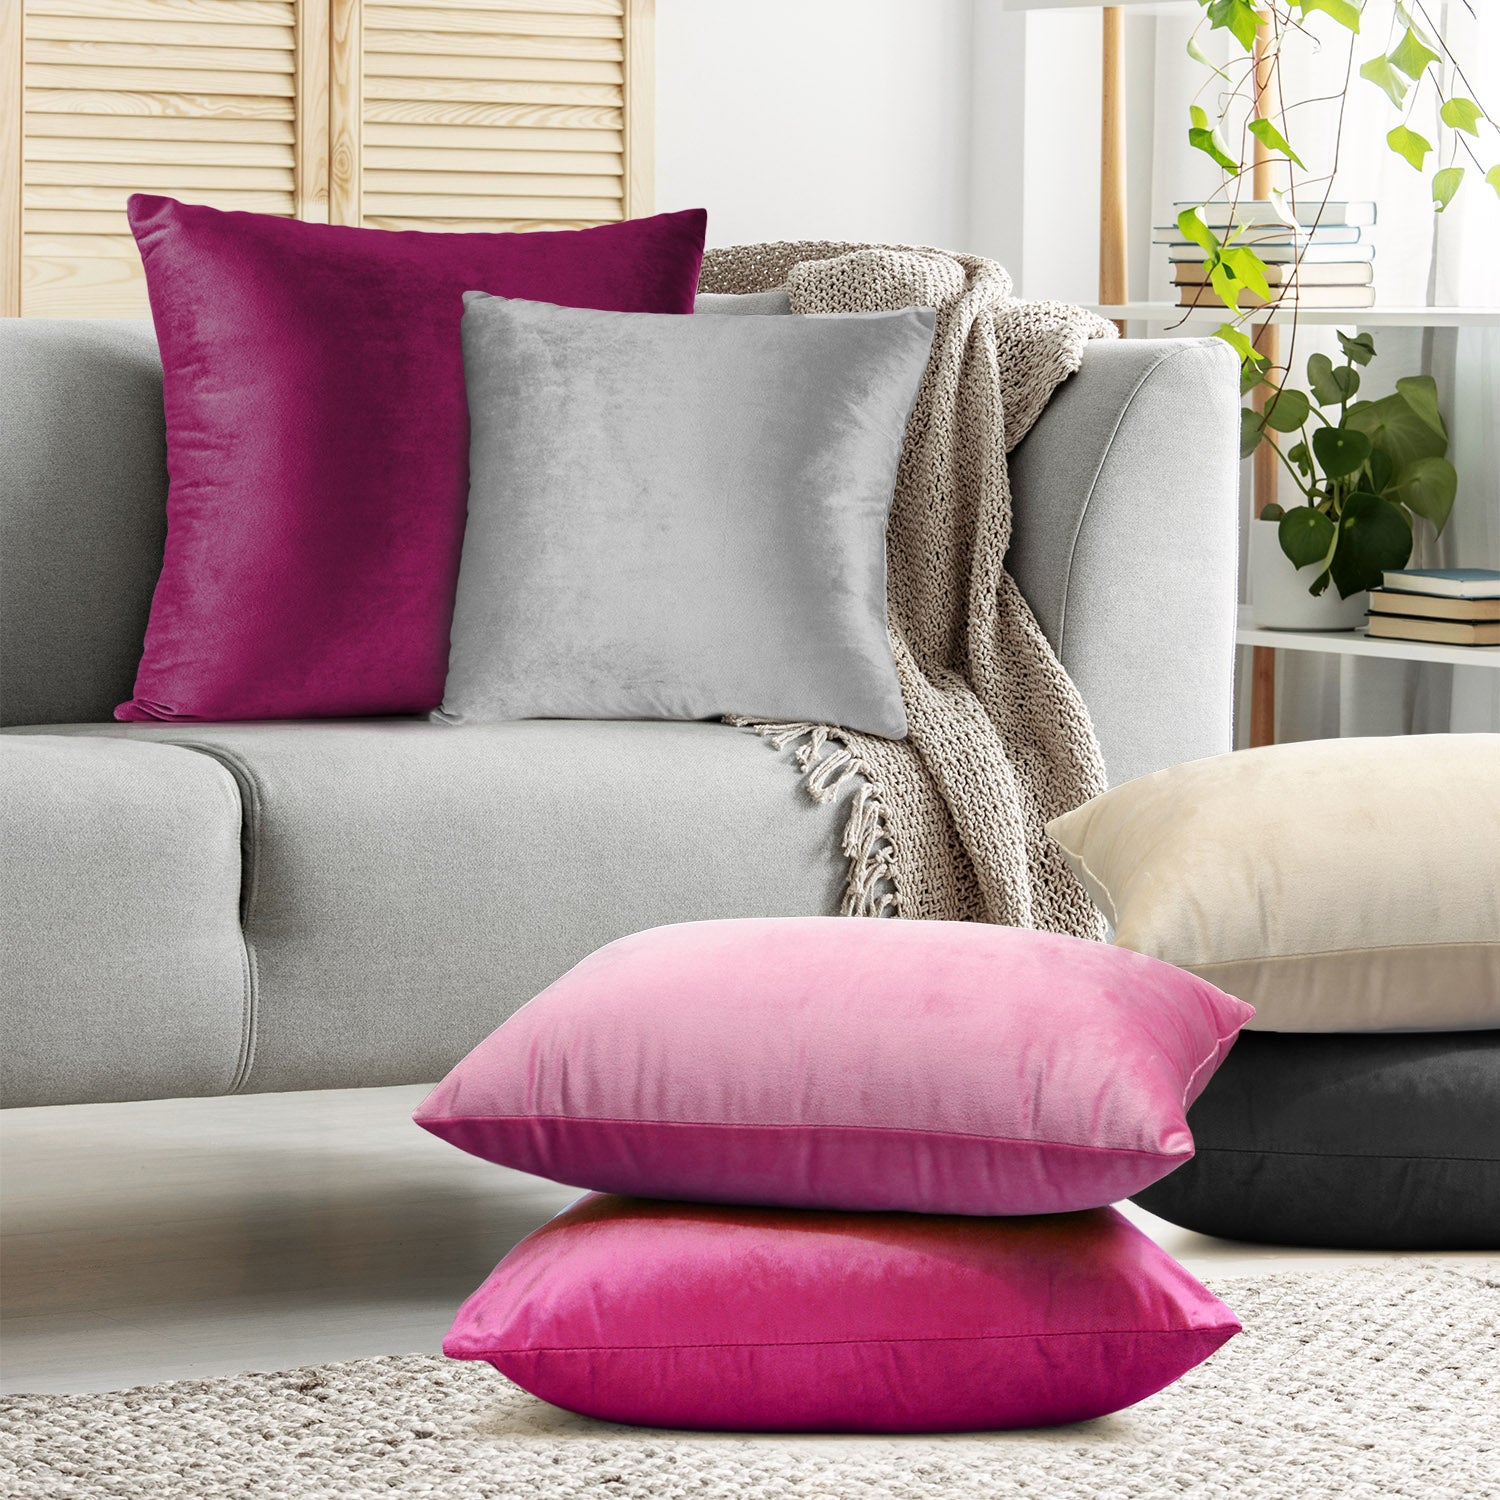 SALE Luxury Soft Cream Beige Velvet Designer Pillow Cover, Decorative  Pillows for Bed Decorative Pillows for Couch Decorative Throw Pillow 